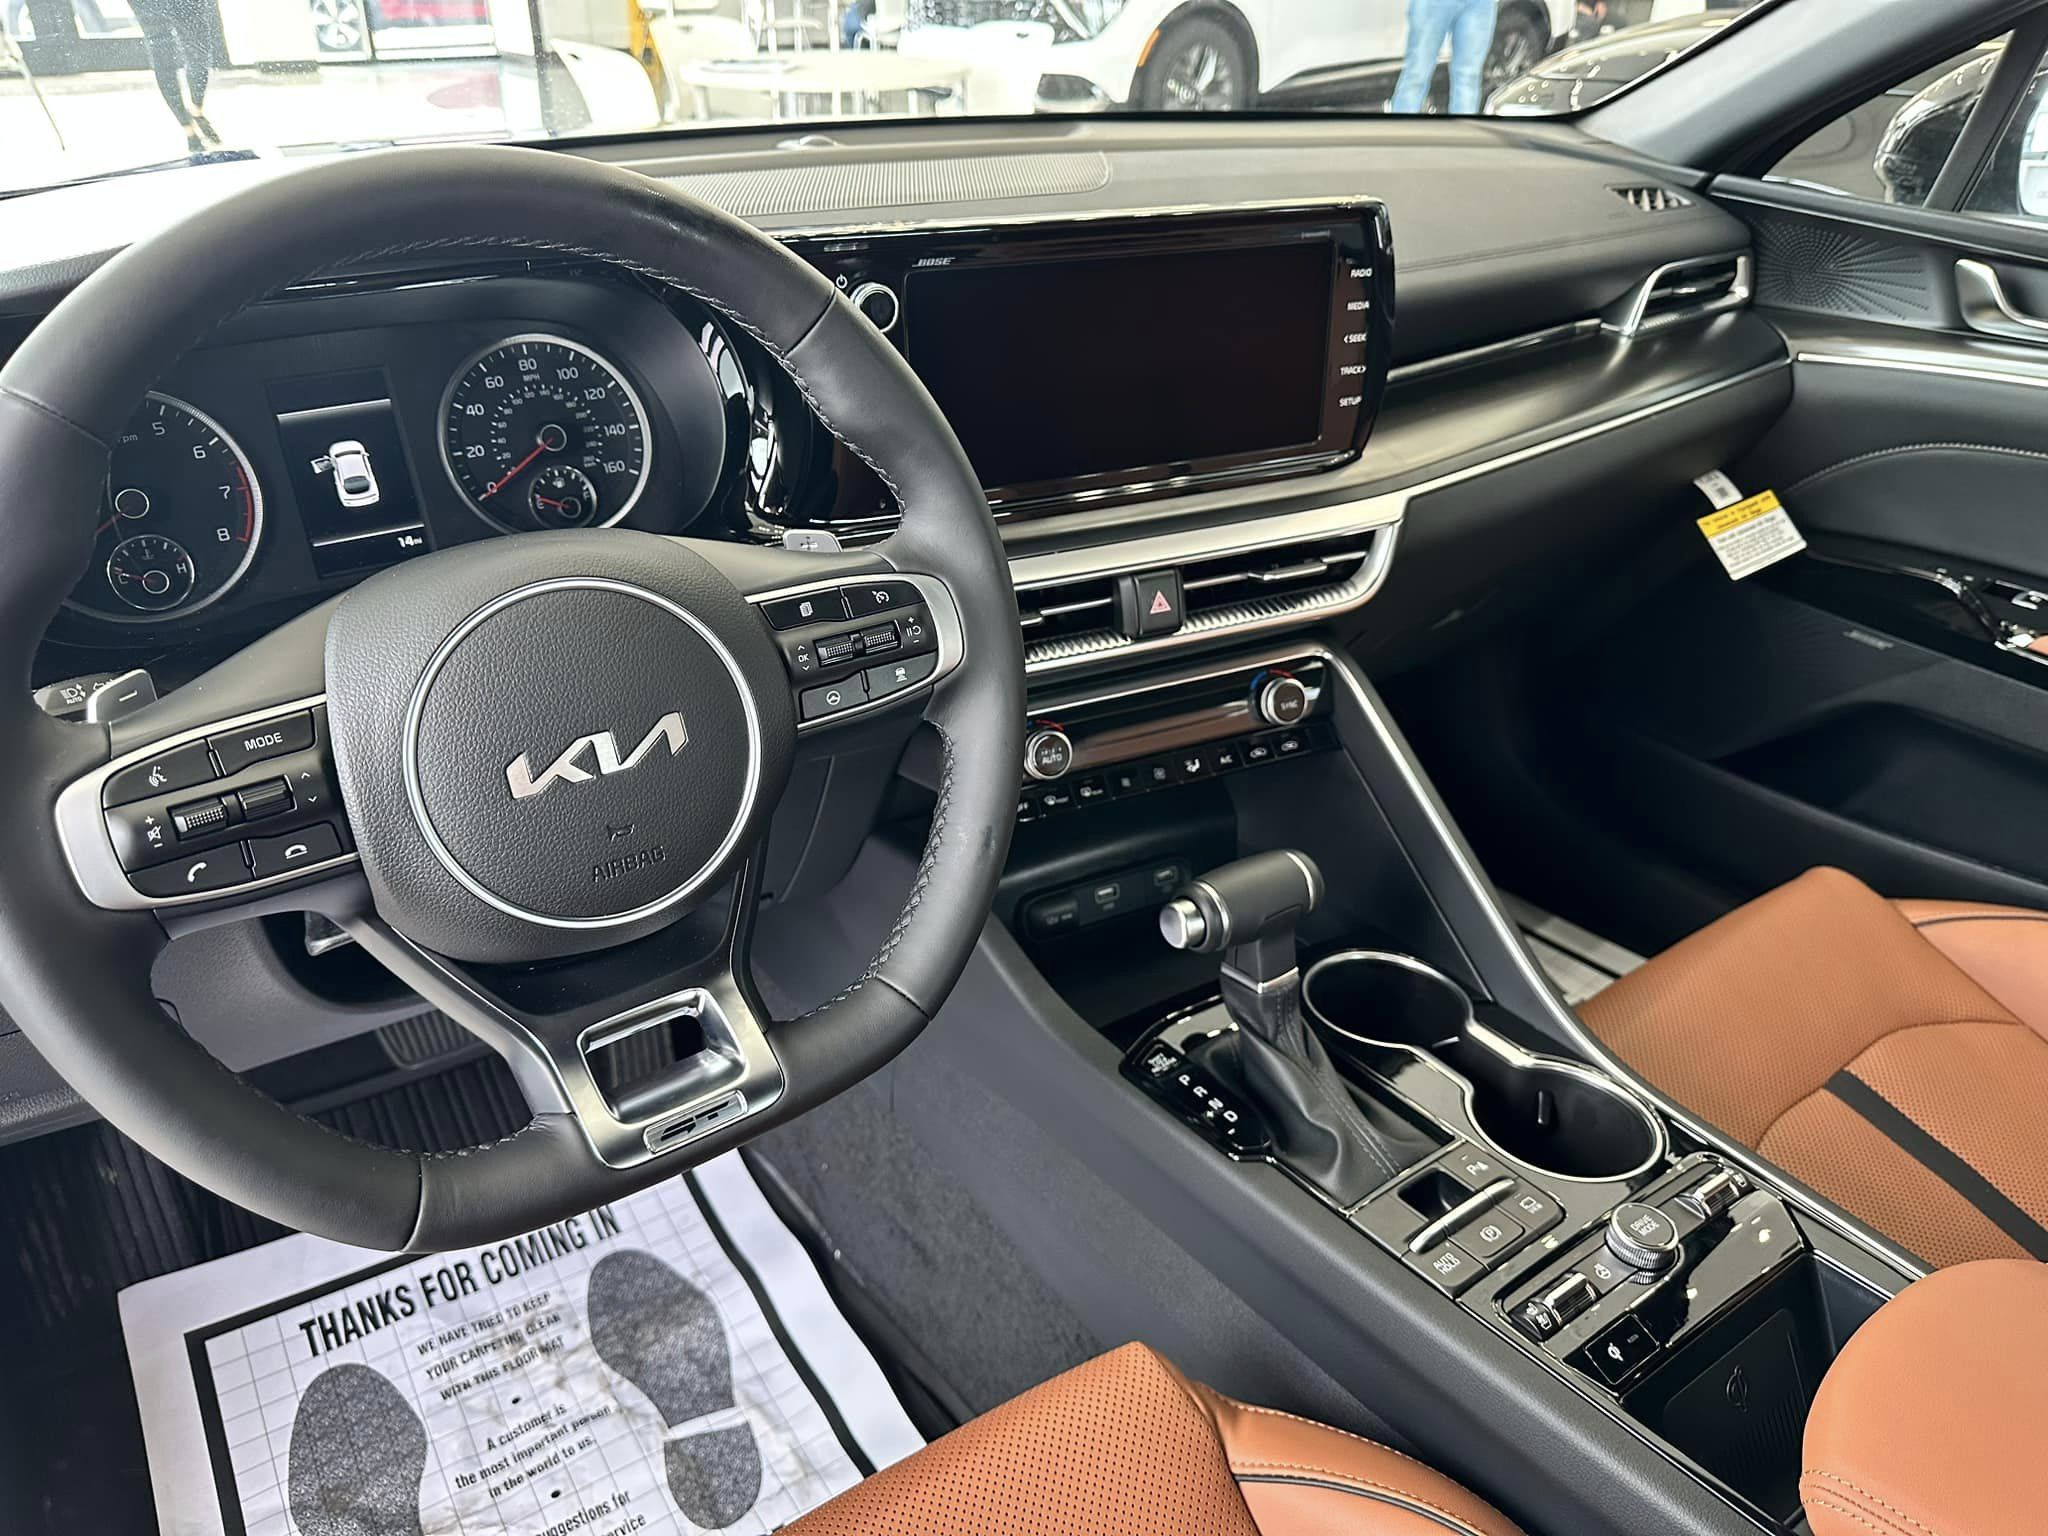 2023 Kia K5 - Saphire Blue GT FWD - Driver's Interior View